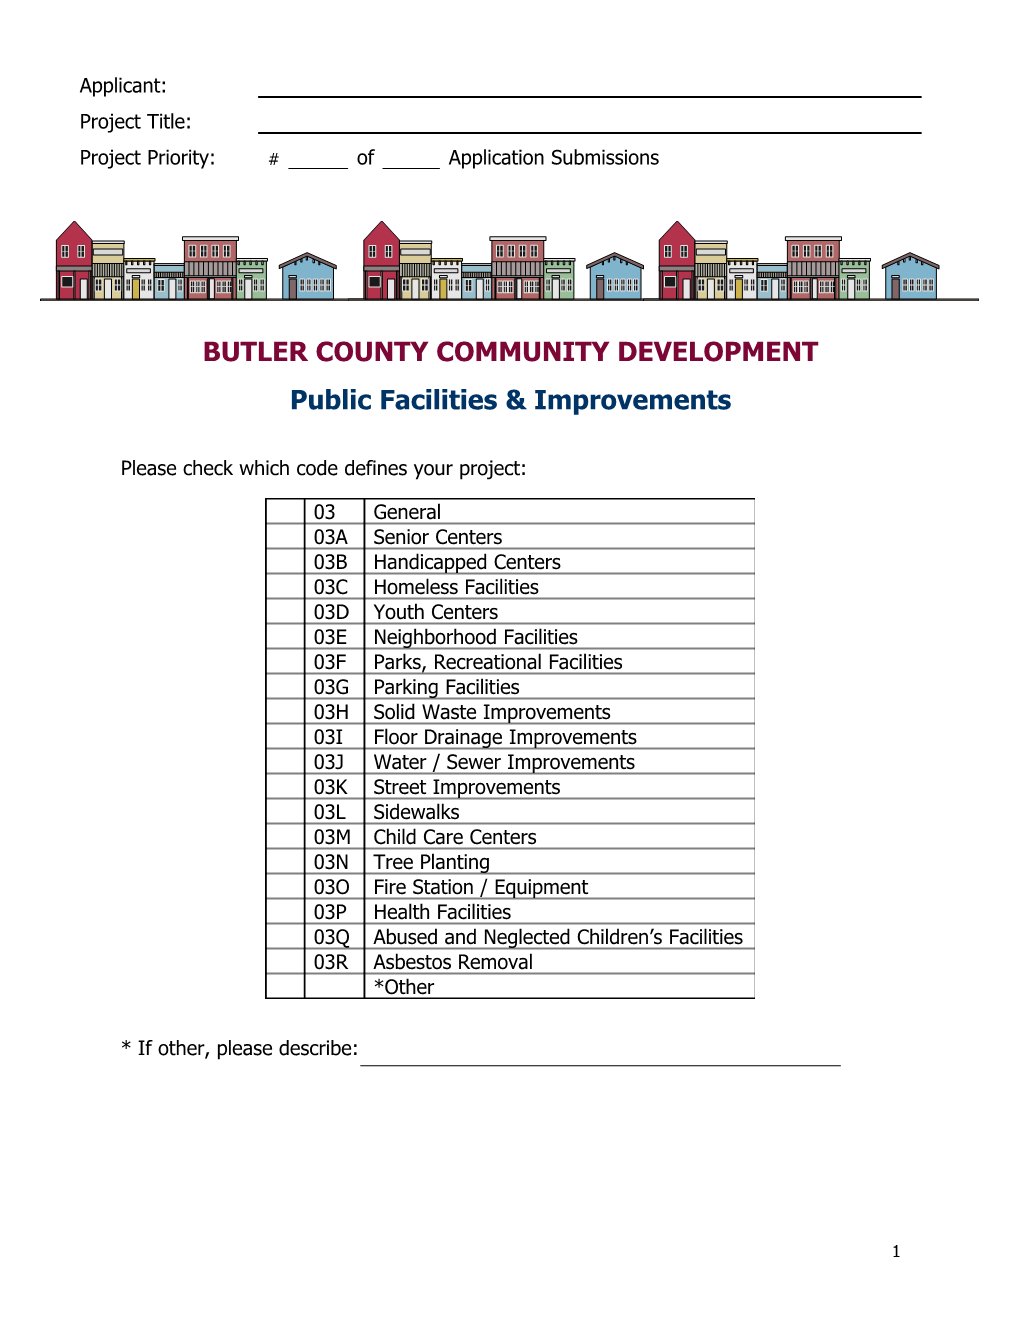 Butler County Community Development